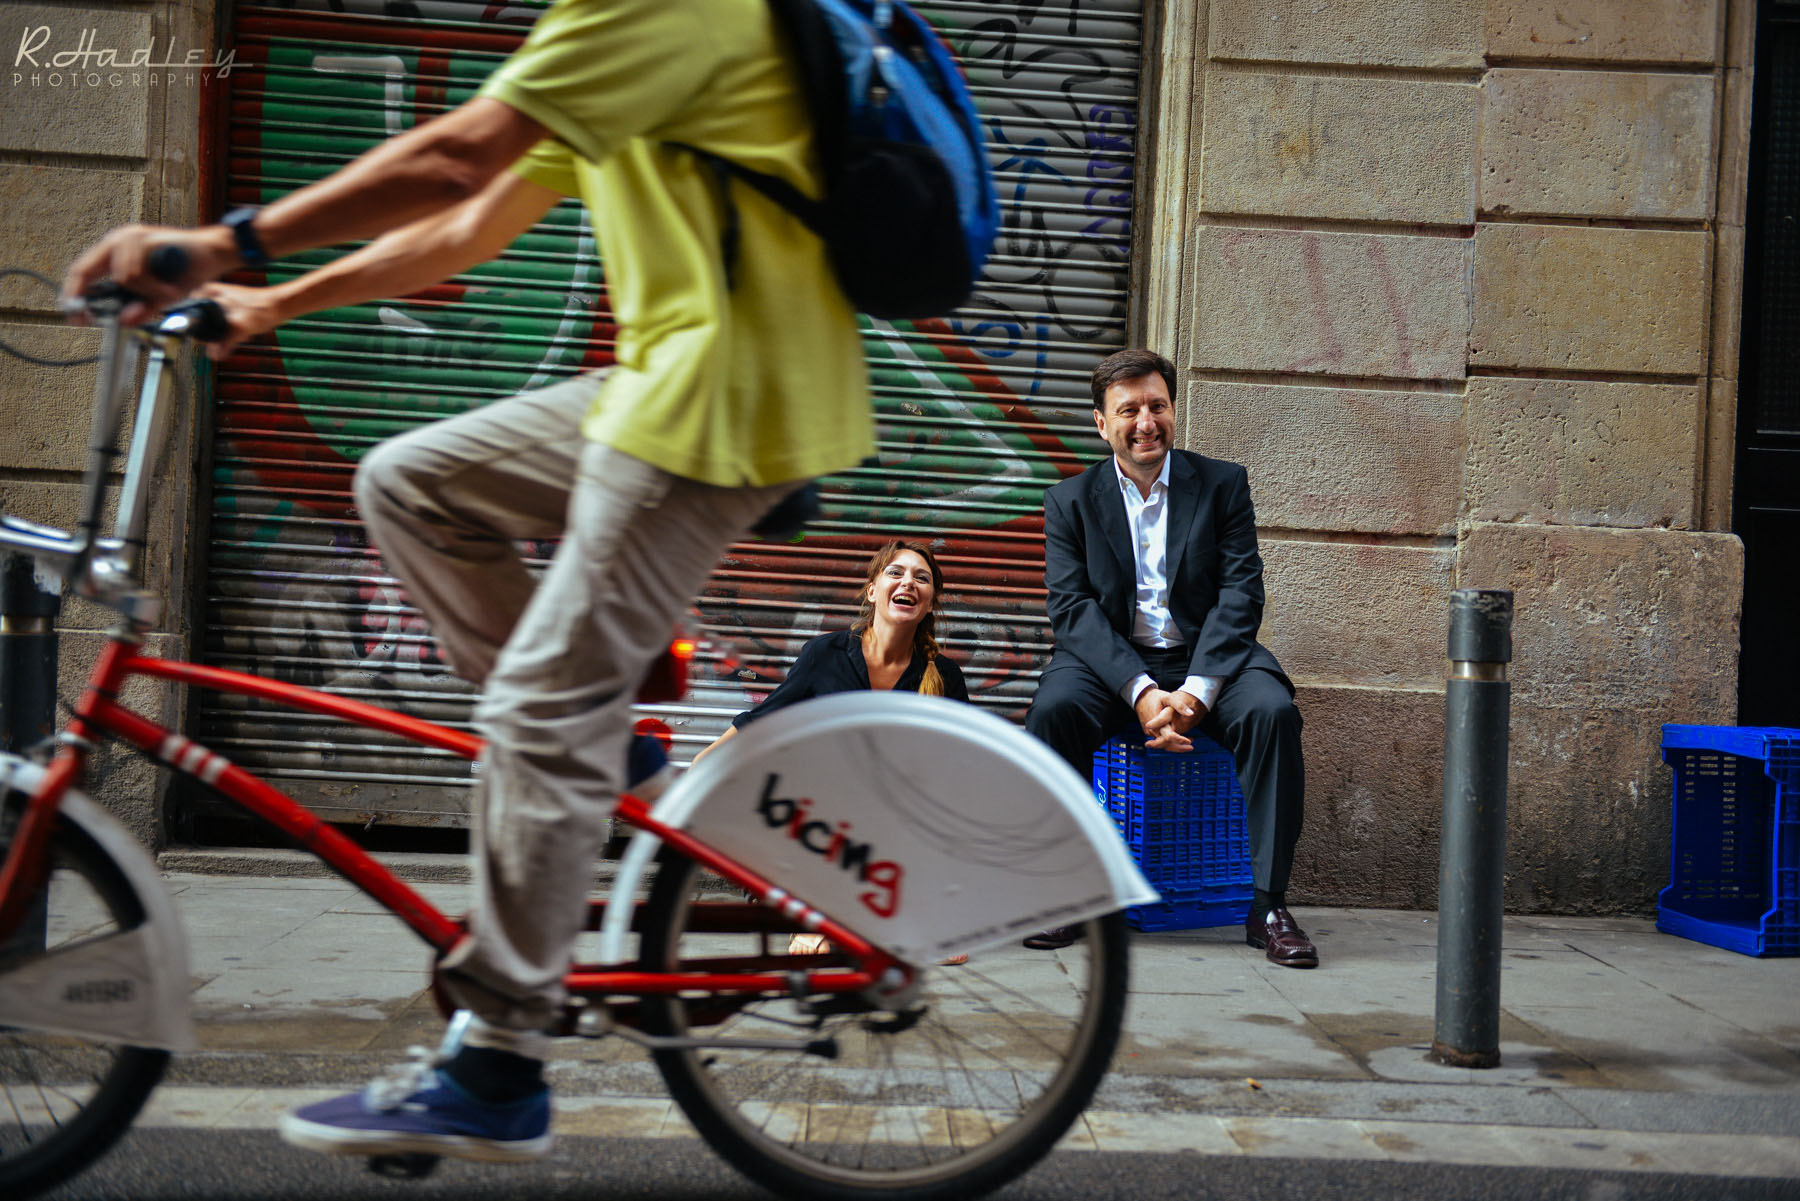 Behind the scenes of a Carolina de Santis film production in Barcelona. On set photographer.